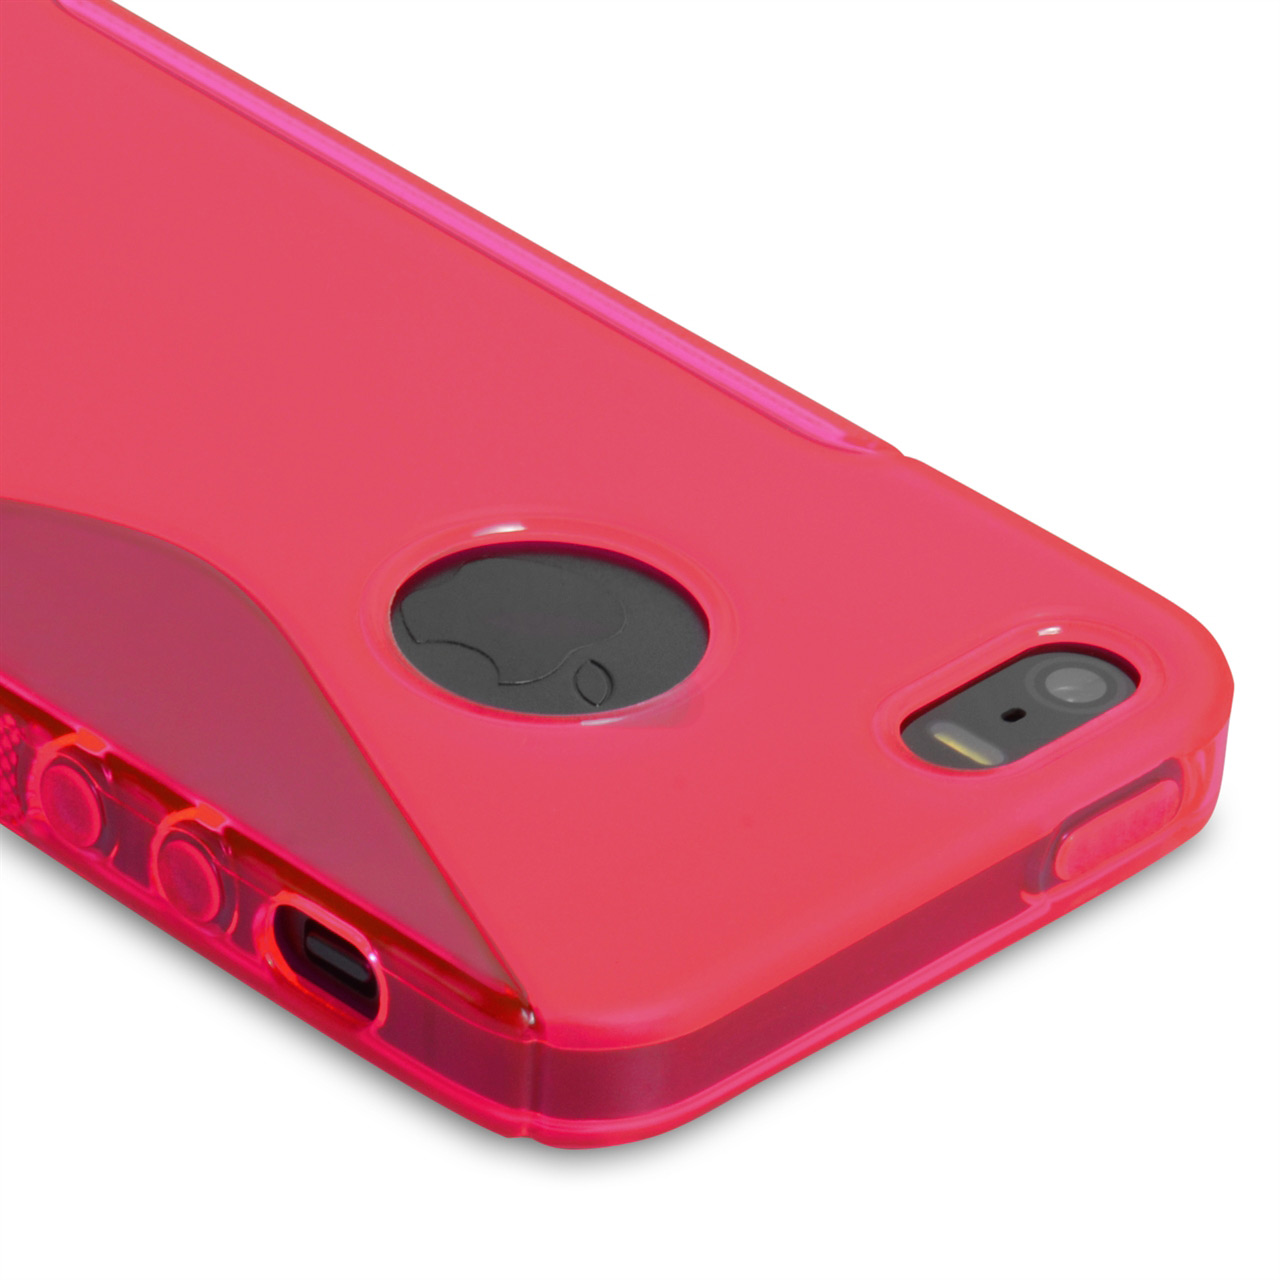 Caseflex iPhone 5 / 5S S-Line Gel Case - Hot Pink